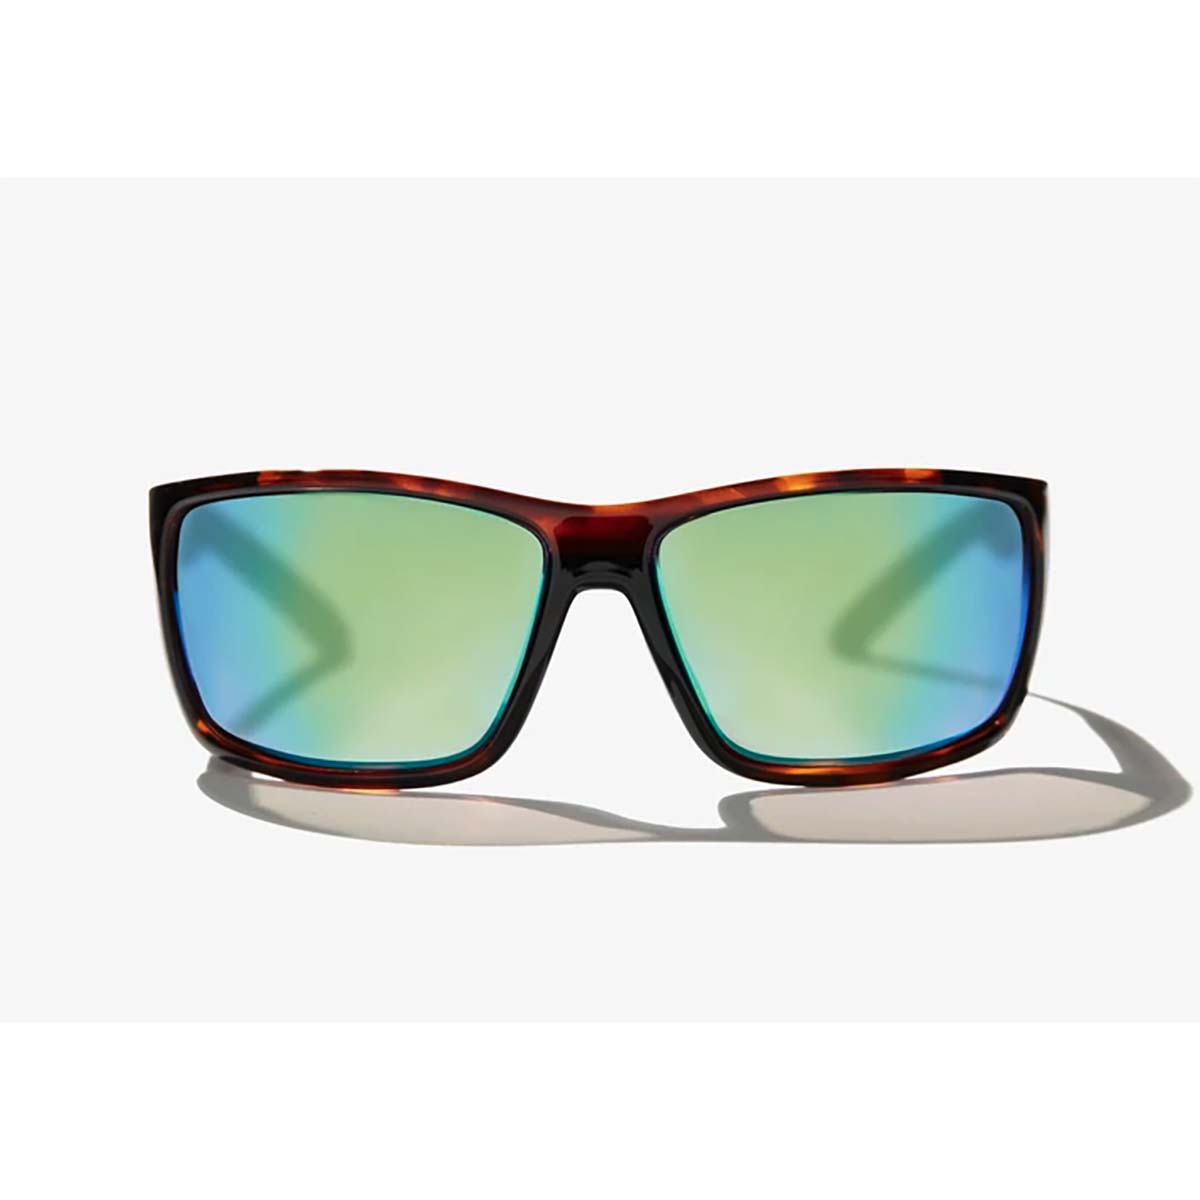 Bajio Bales Beach Sunglasses Polarized in Dark Tortoise Gloss with Green Plastic